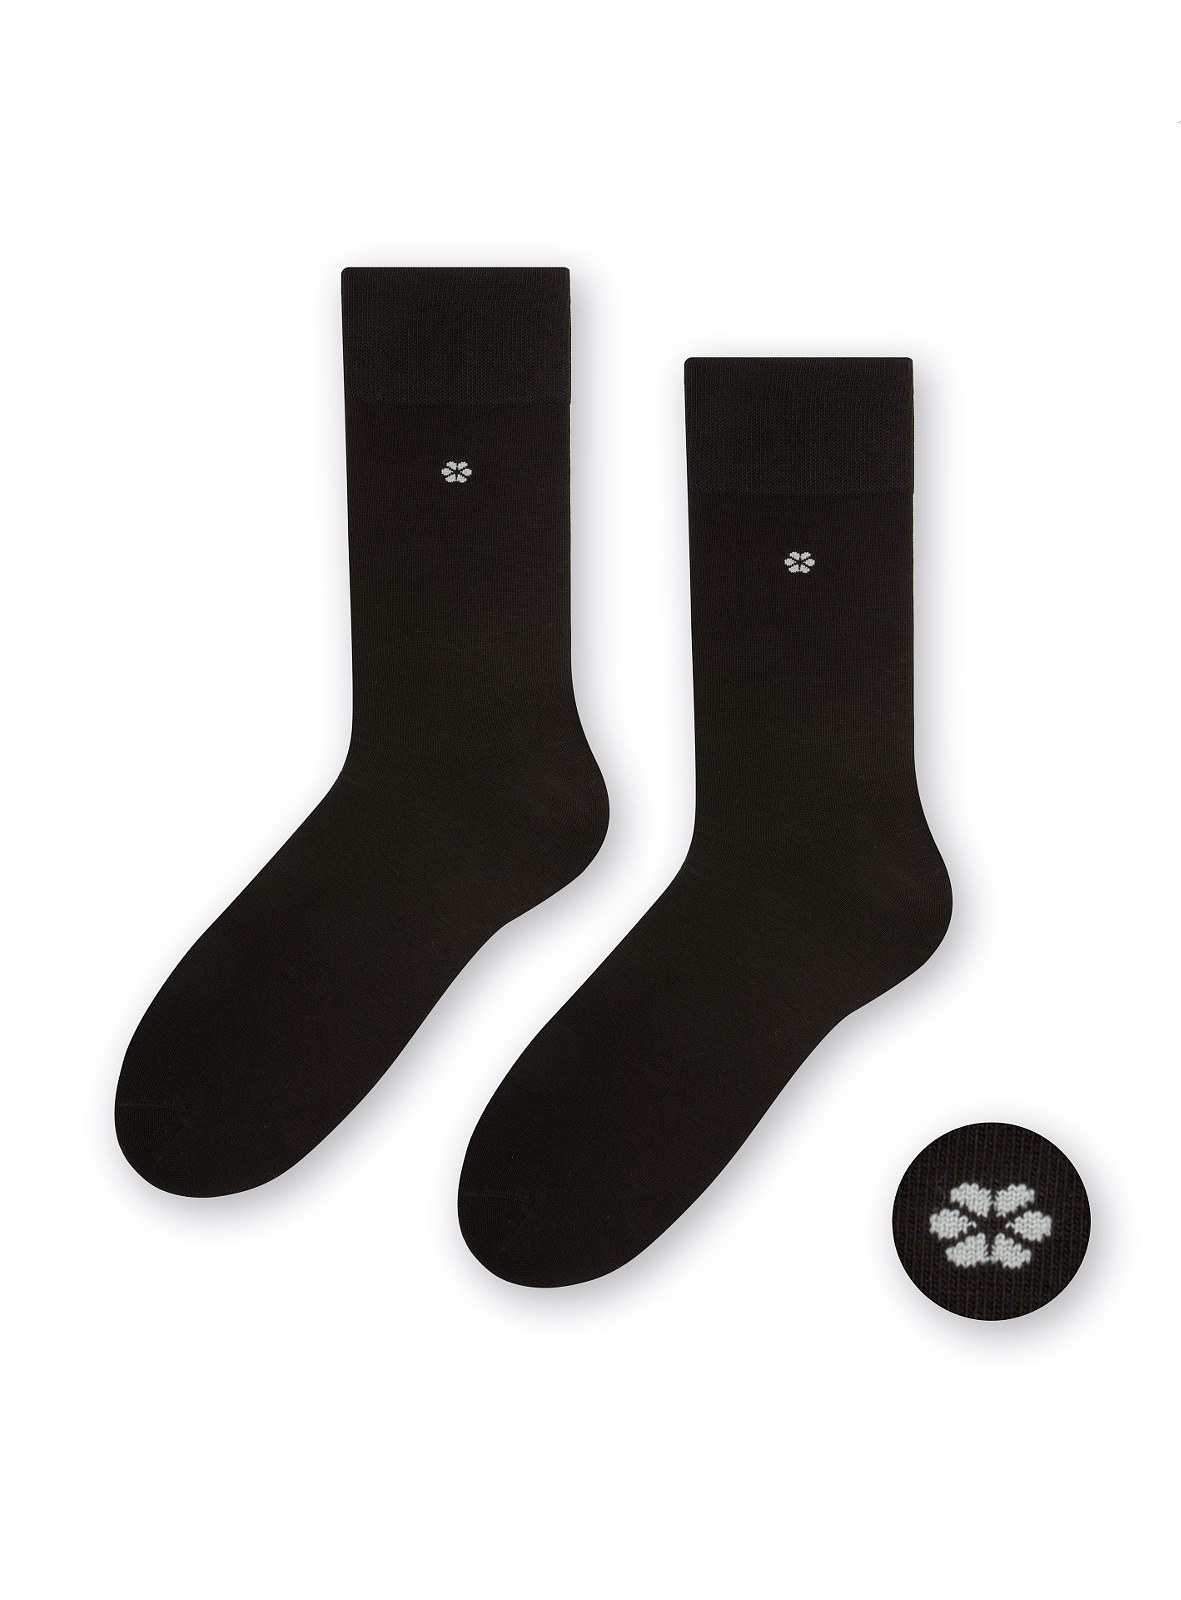 Pánské ponožky k obleku Steven art.056 šedá 42-44